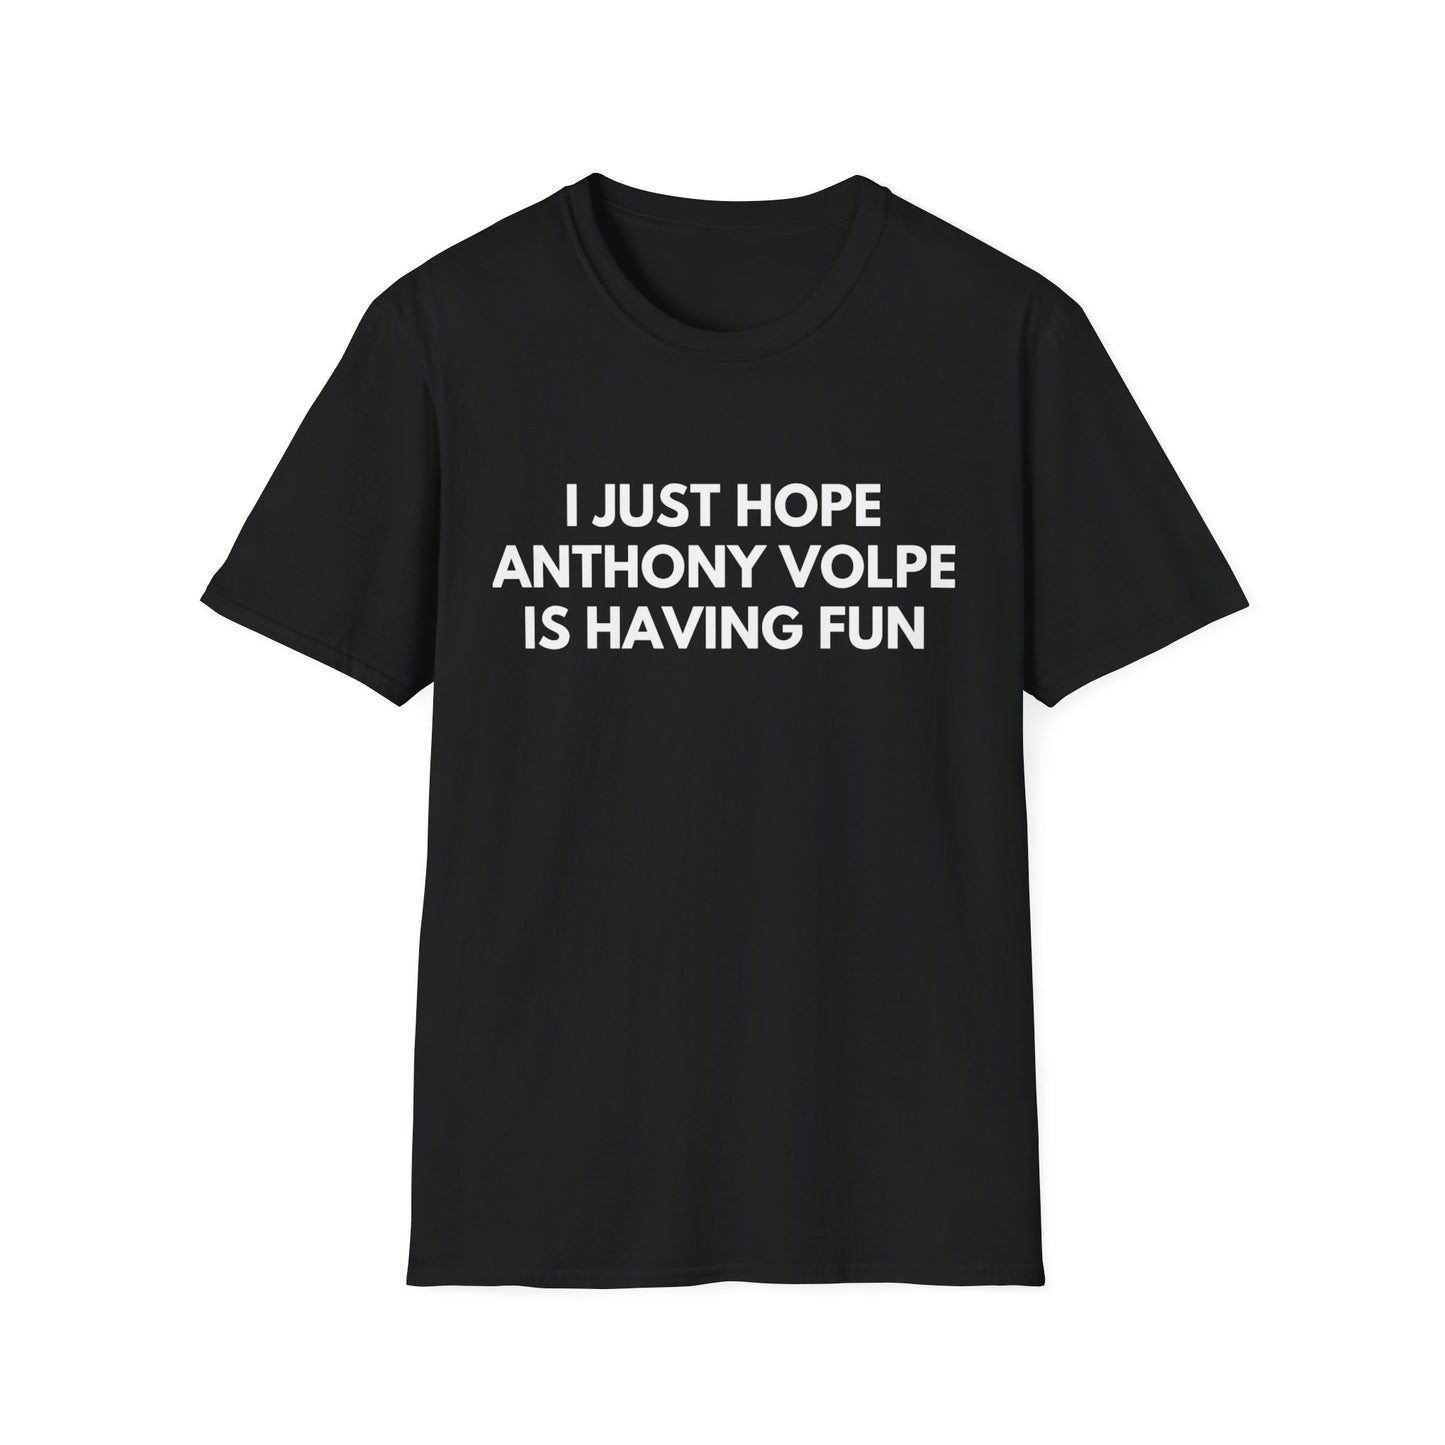 Anthony Volpe Having Fun - Unisex T-shirt